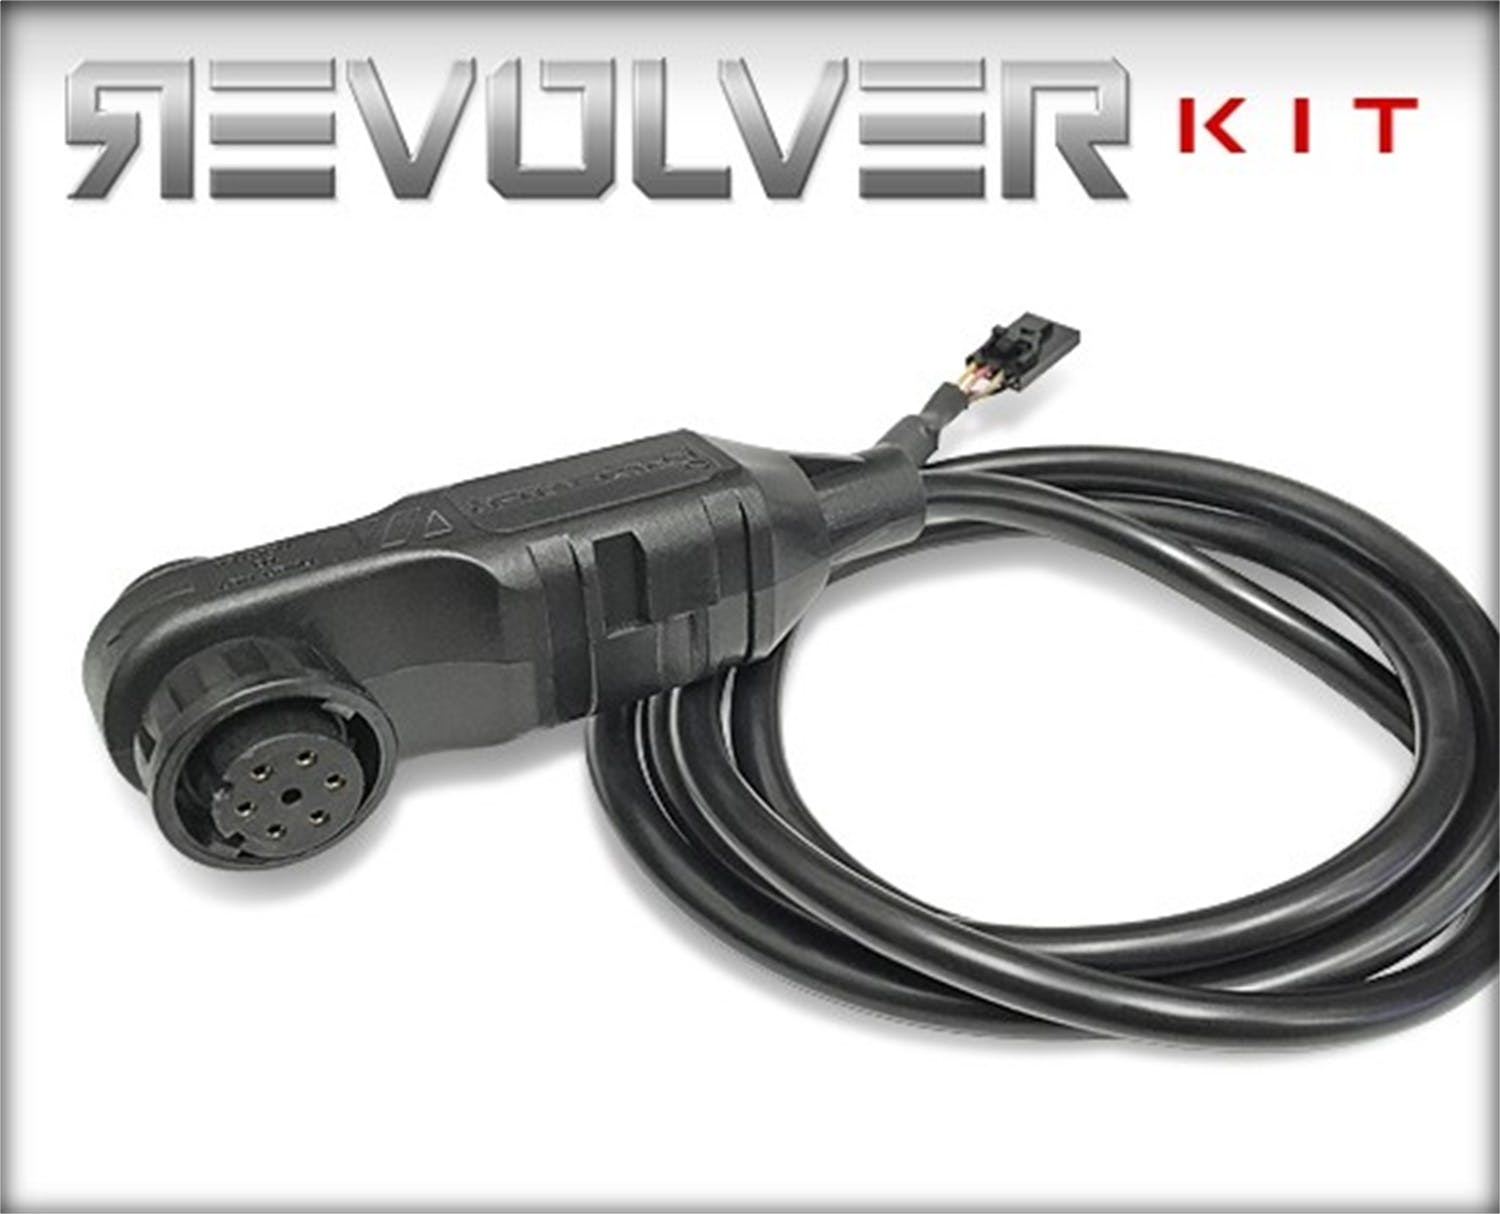 Edge Products 14108-3 Revolver Performance Kit